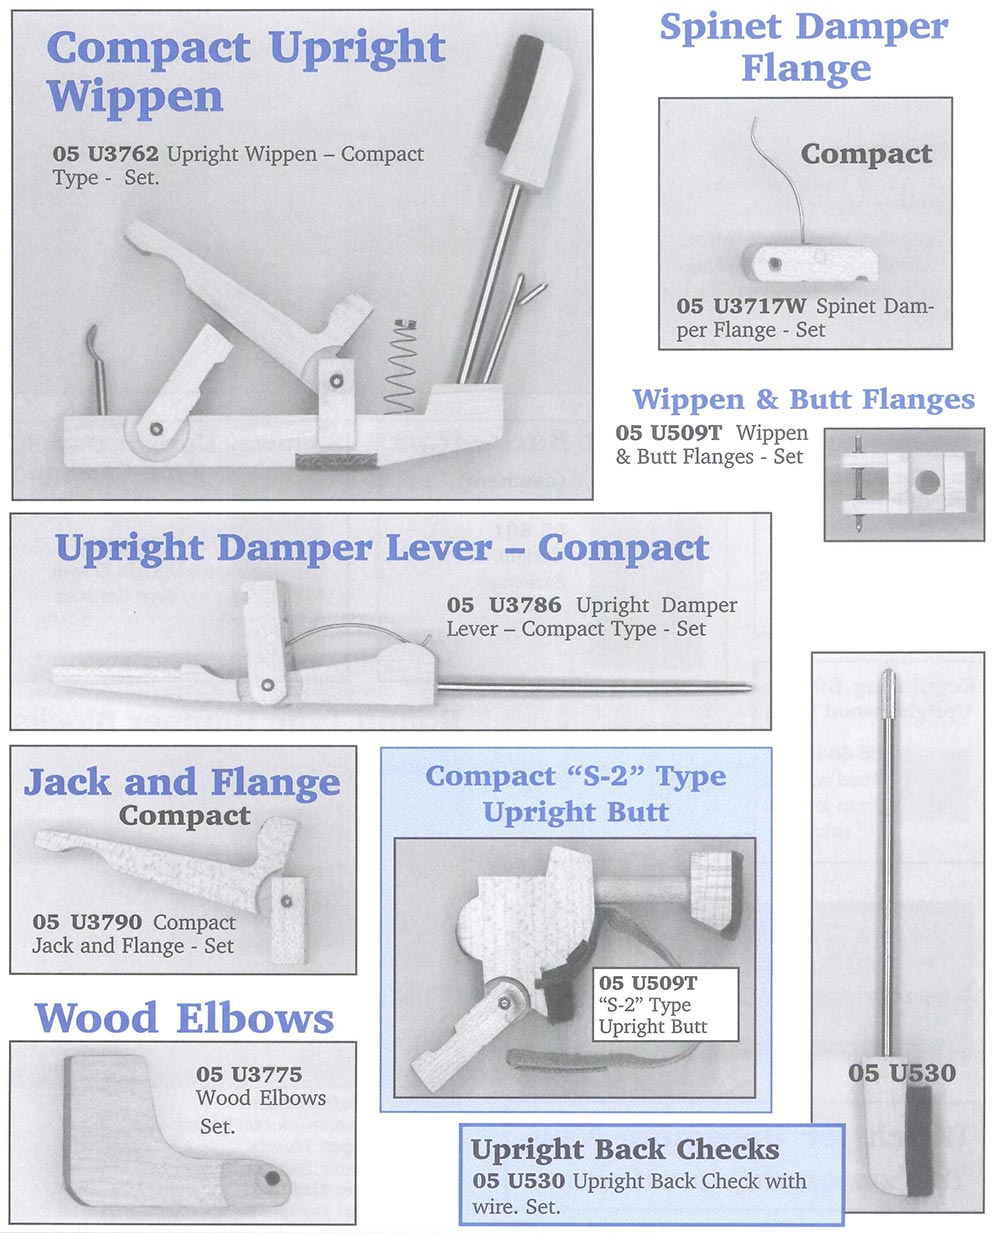 Upright Damper Lever(Compact)